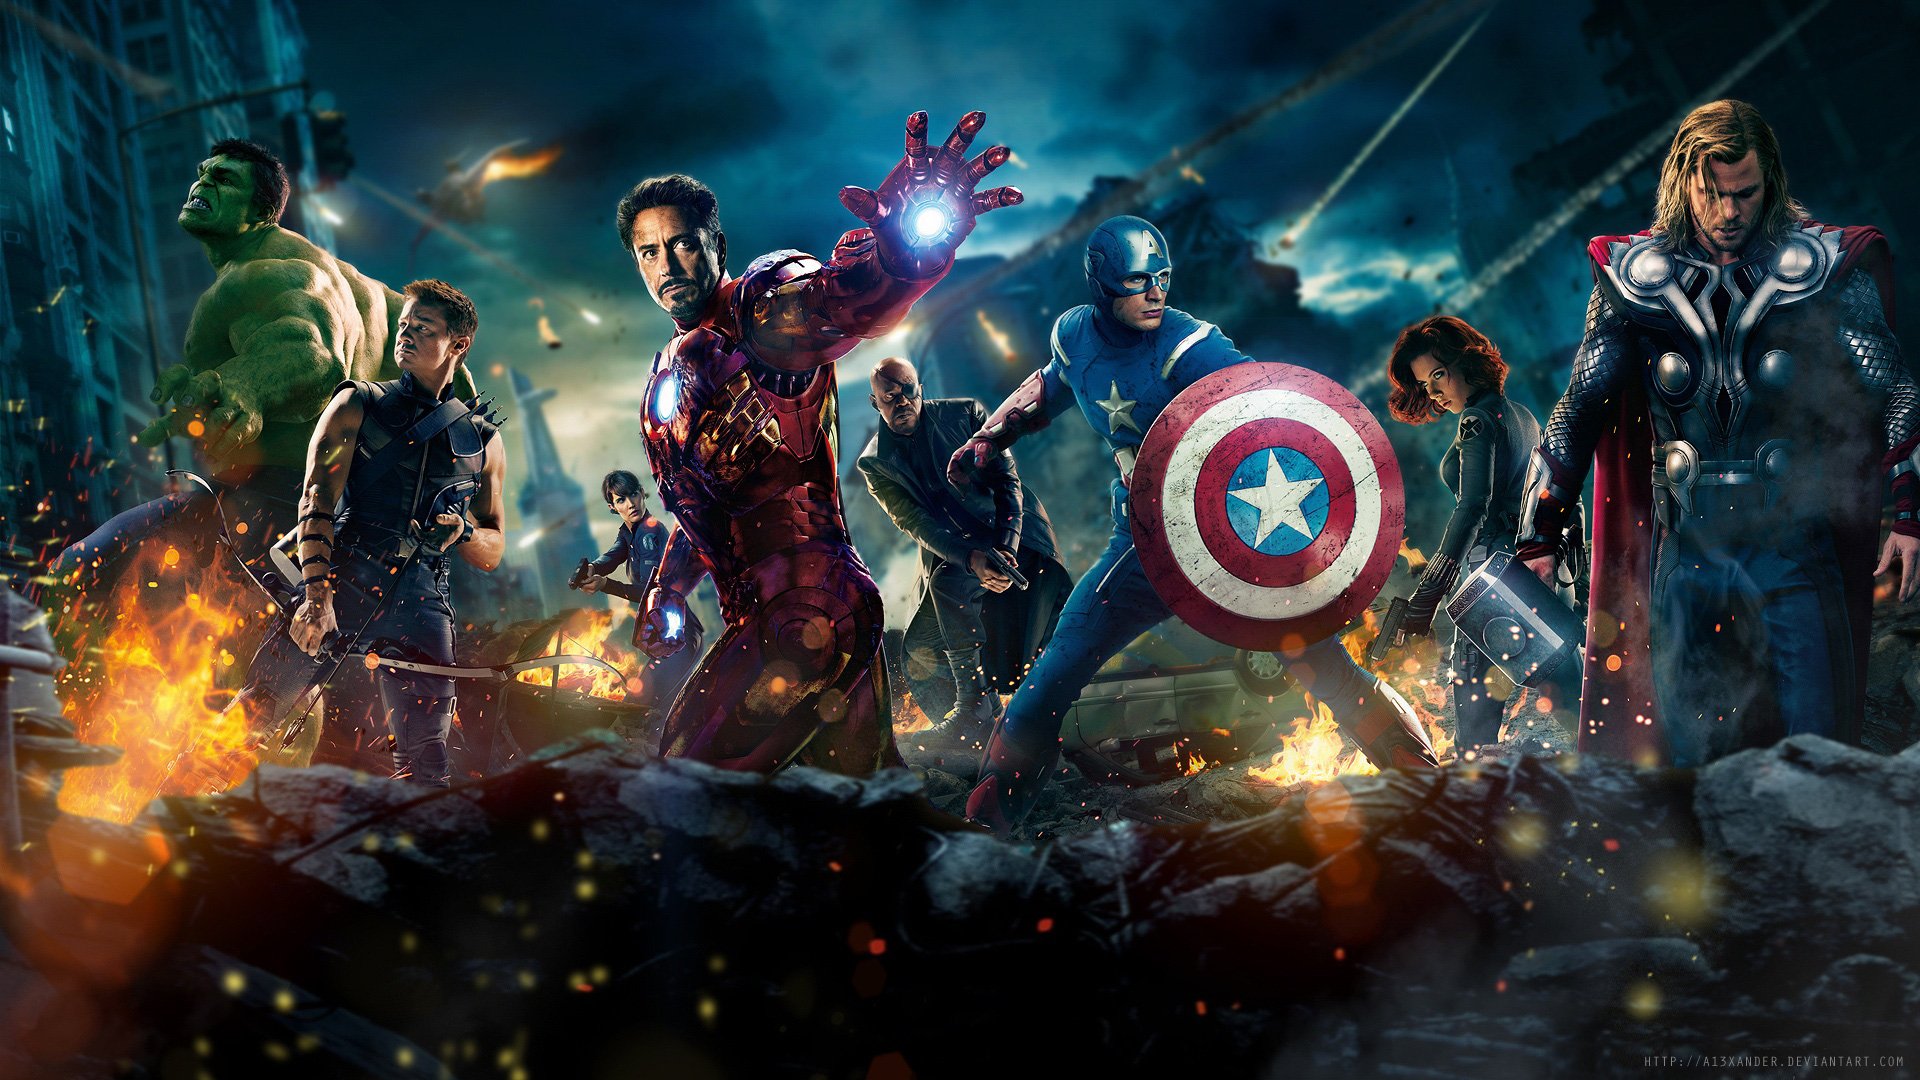 Avengers Full HD Wallpapers download 1080p desktop backgrounds 1920x1080